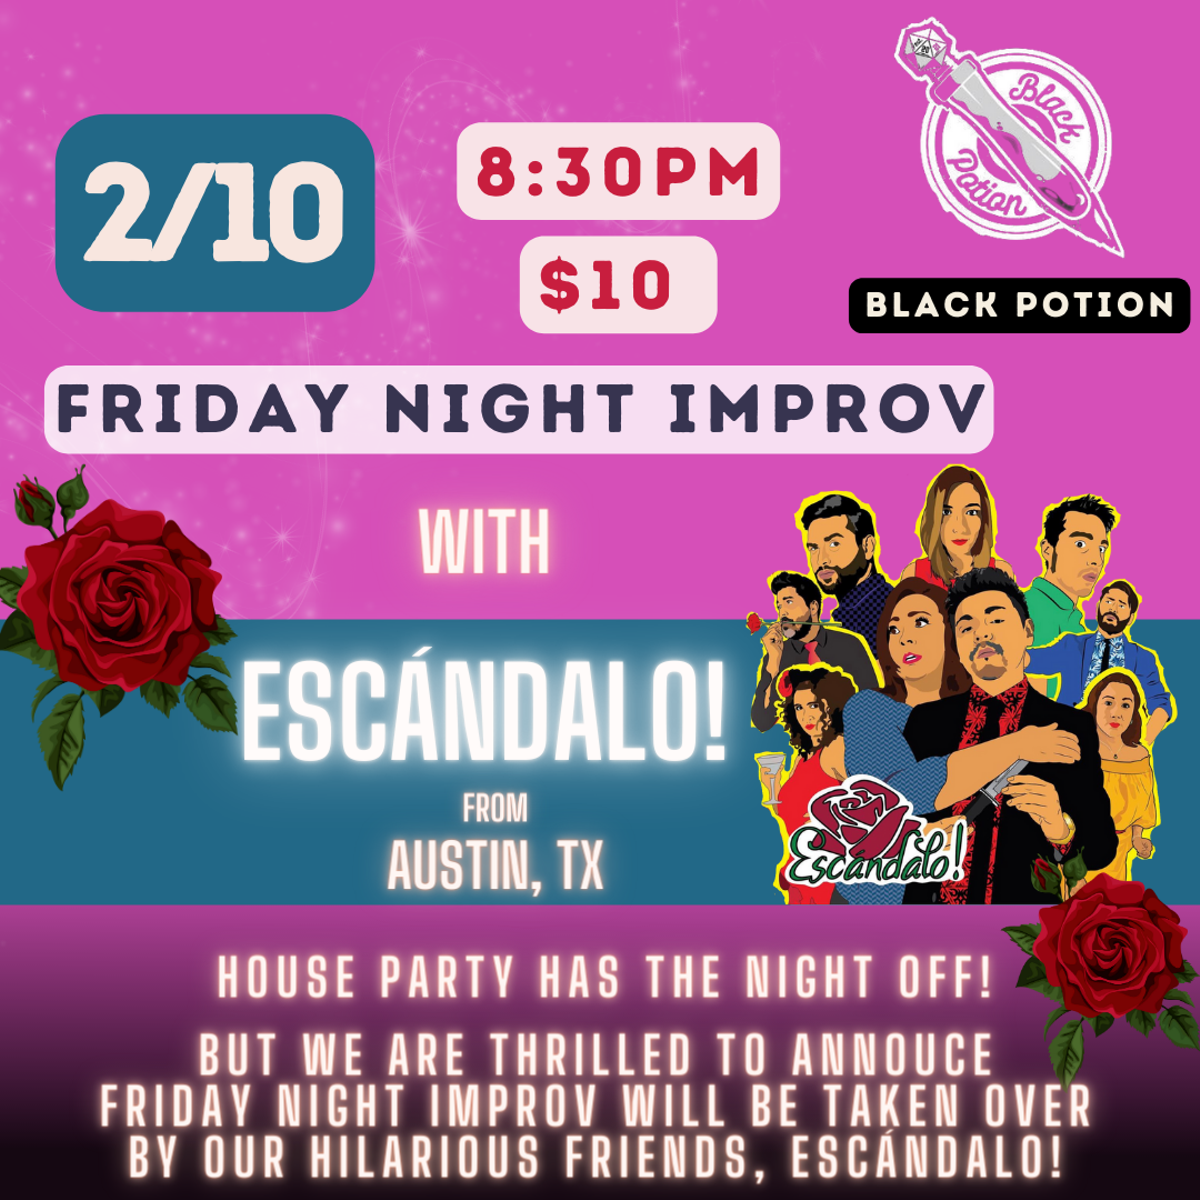 Friday Night Improv with Escándalo! from Austin, TX